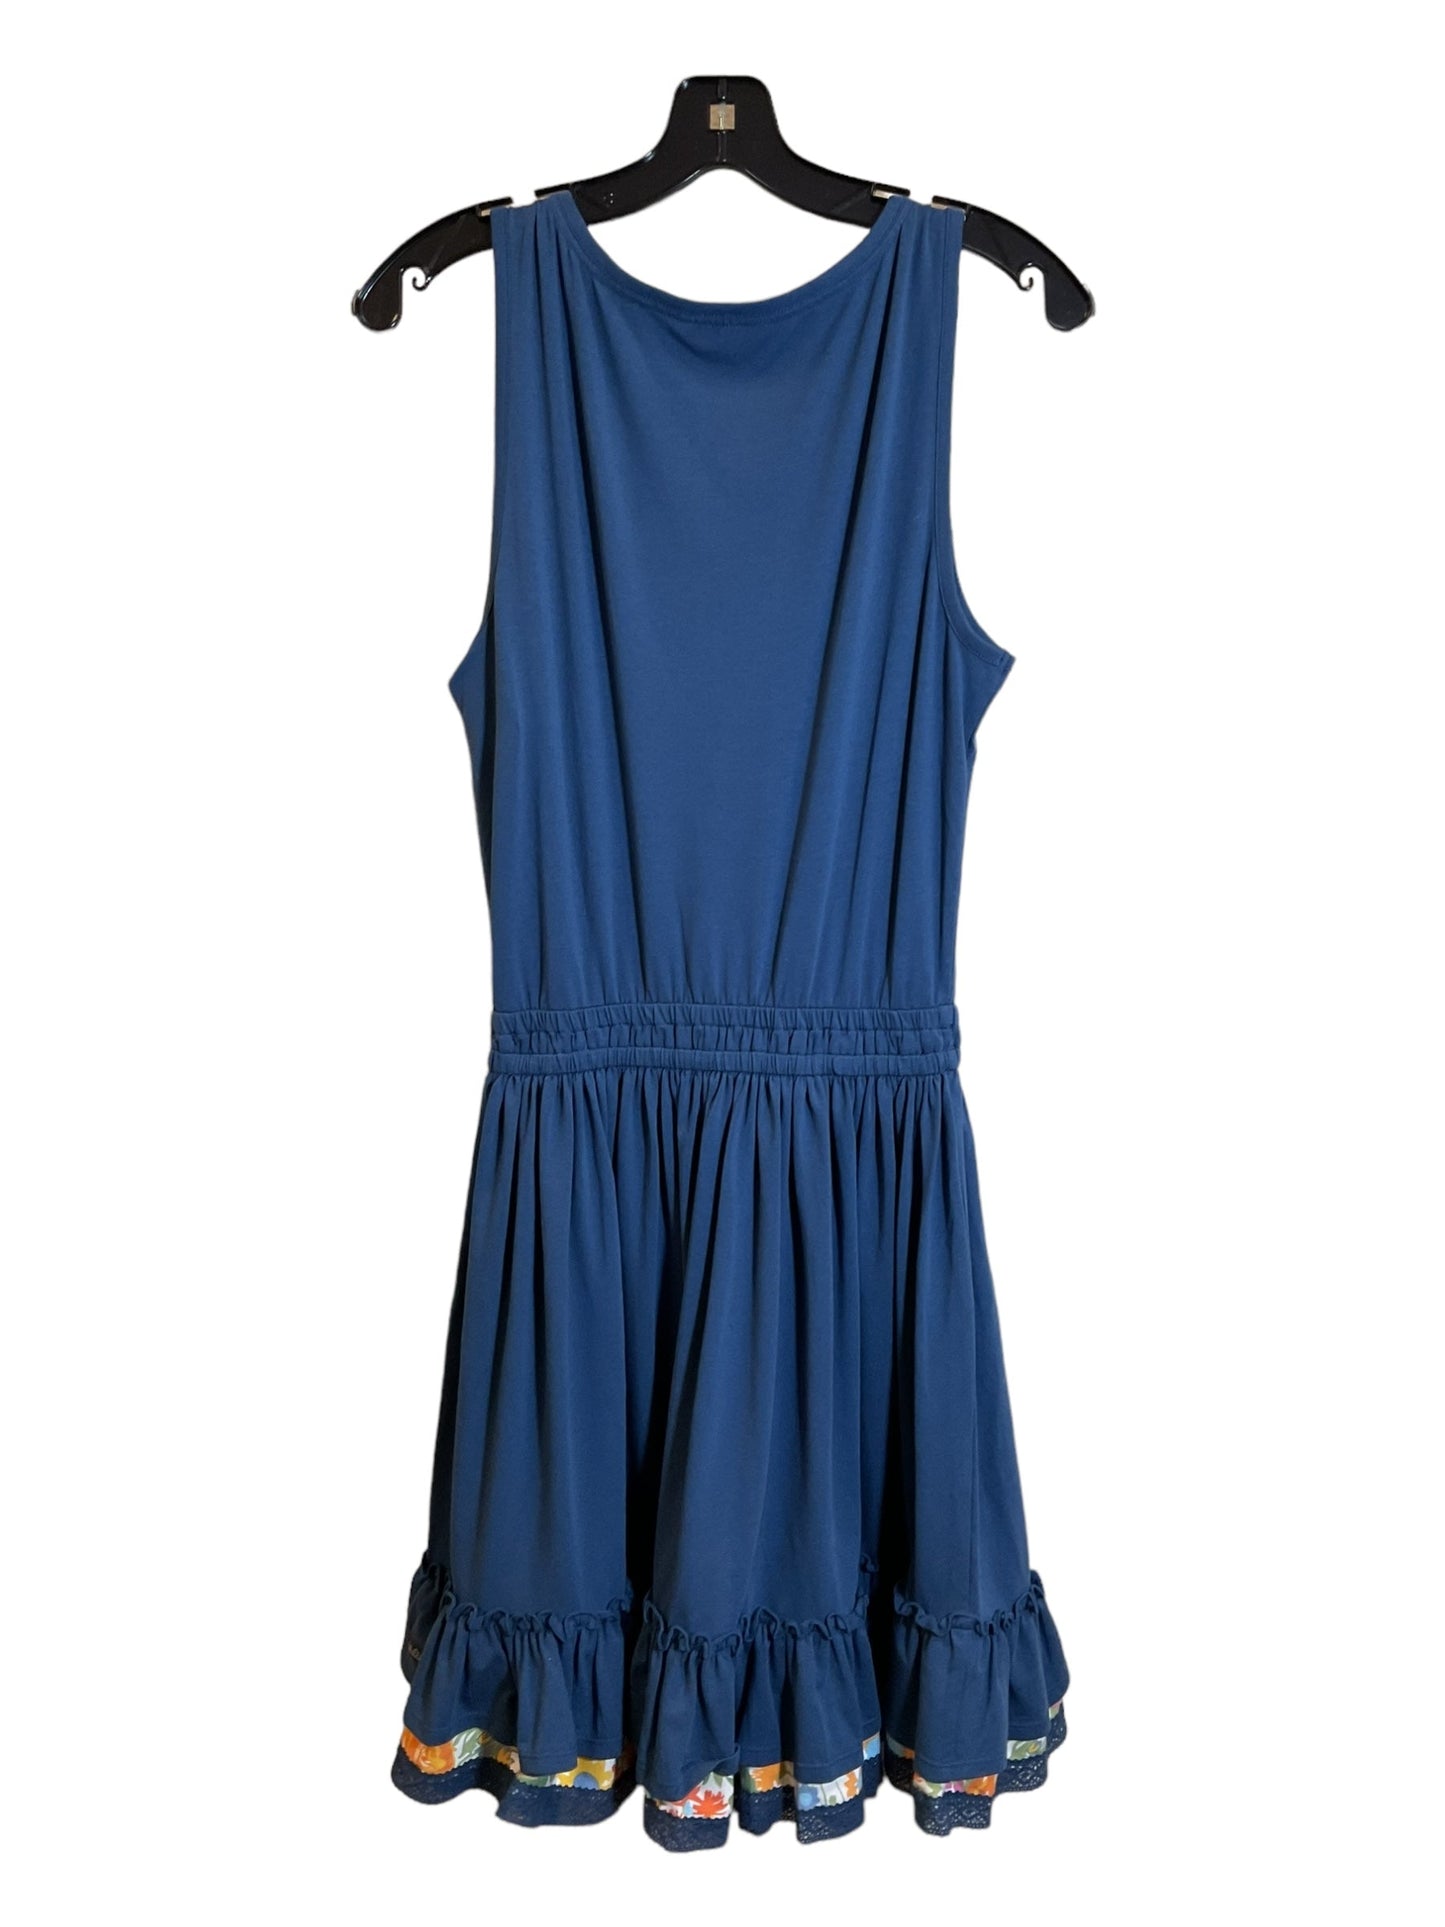 Dress Casual Midi By Matilda Jane  Size: S